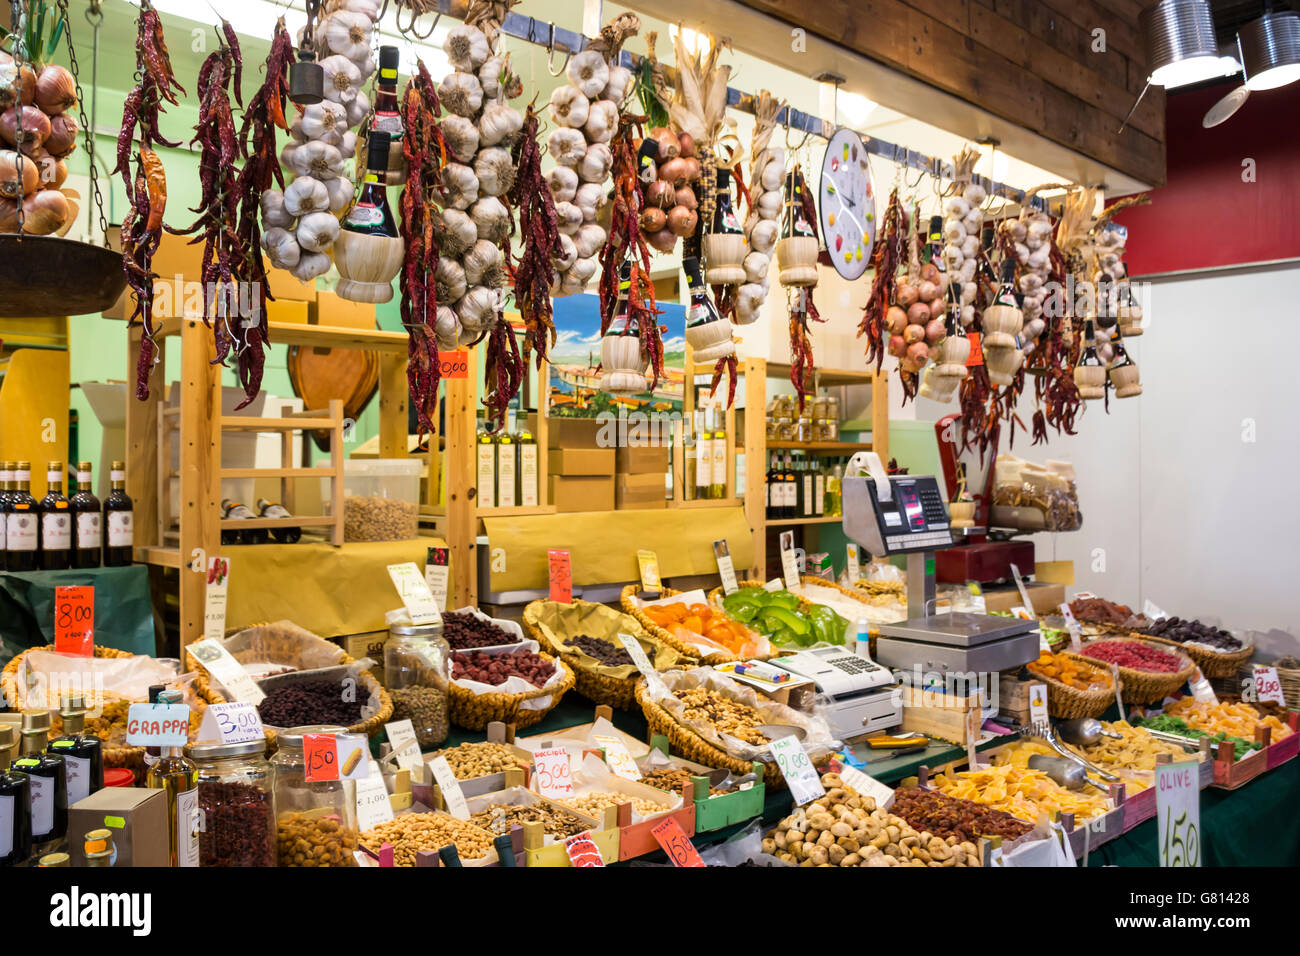 Mercato Centrale (Central Market), Florence, Italy Stock Photo - Alamy